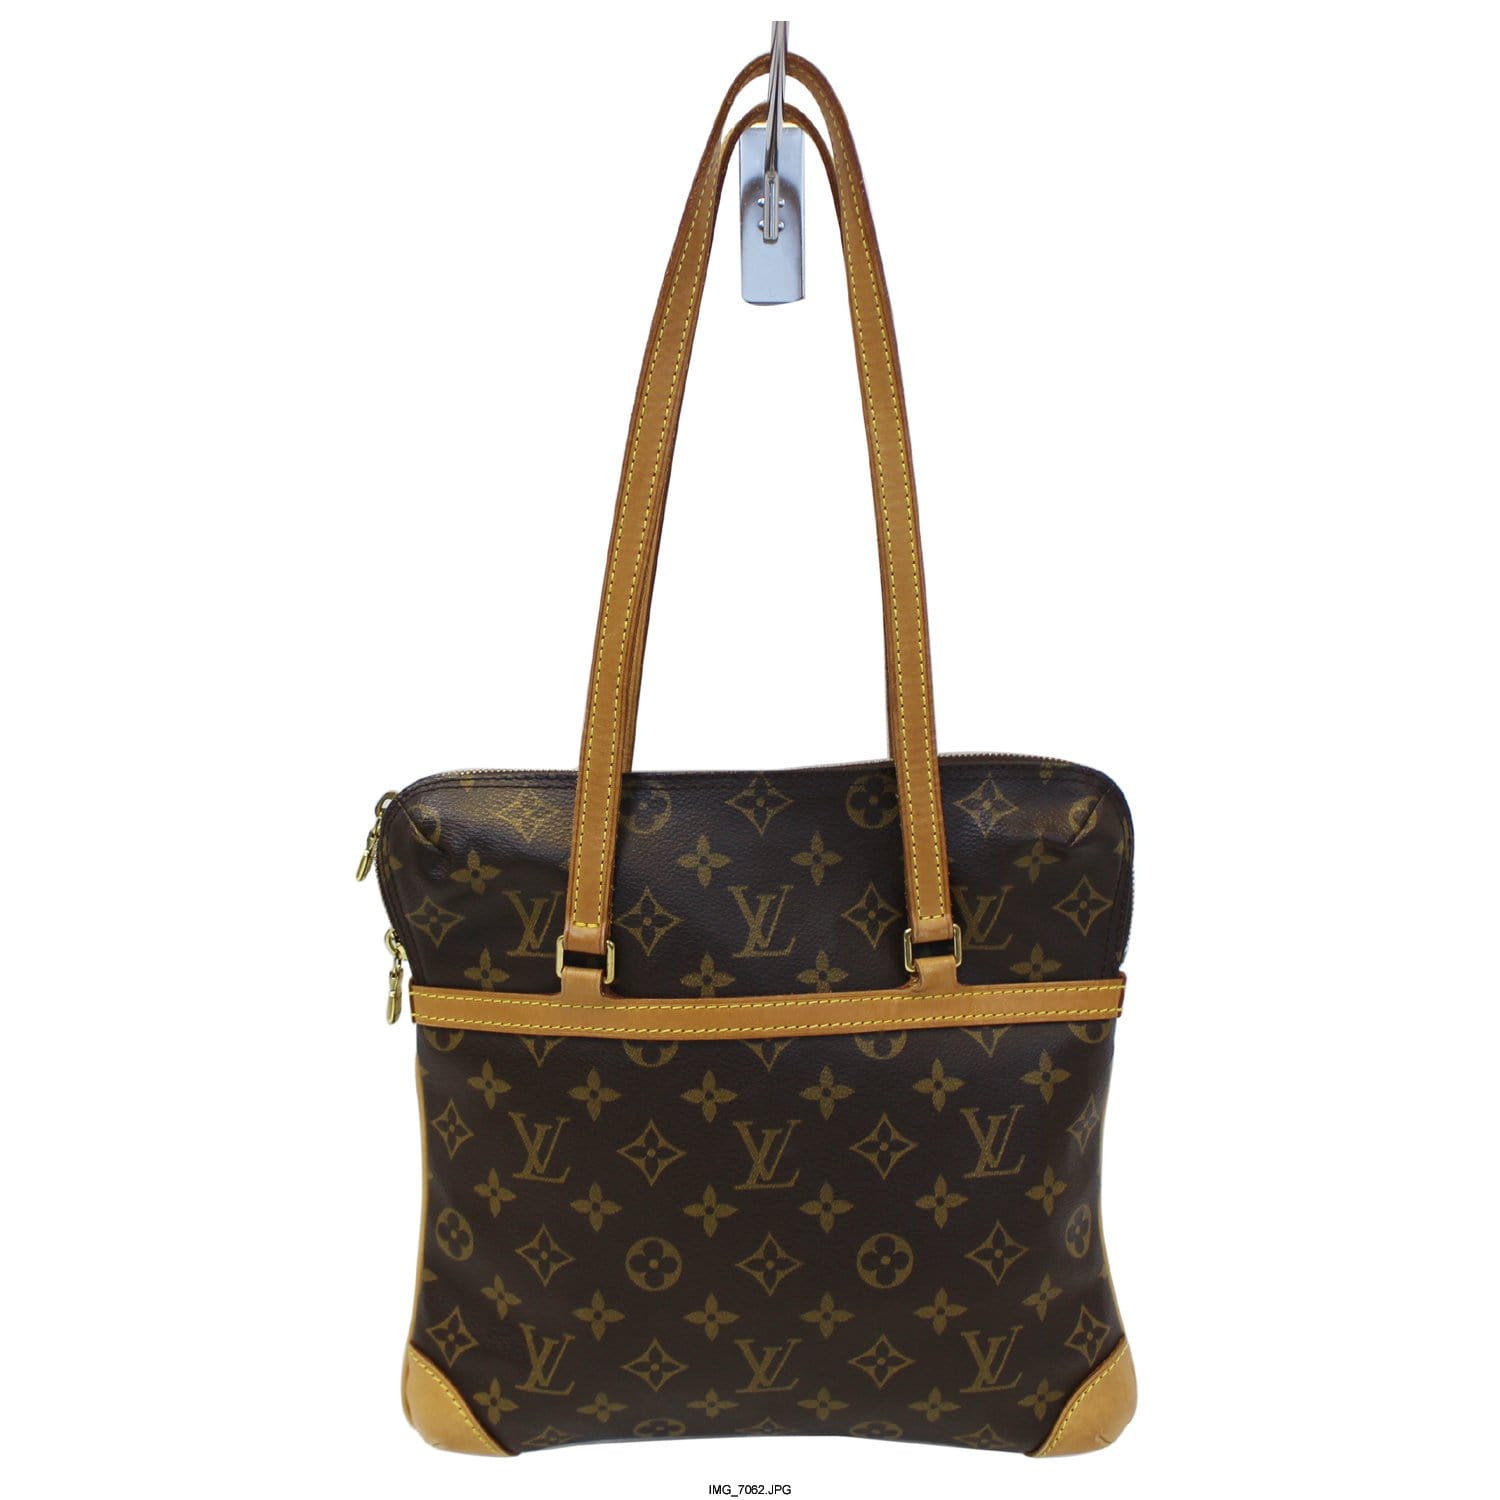 Coussin Bag 小尺寸登場，Louis Vuitton 還讓背法又+ 1！ - POPBEE